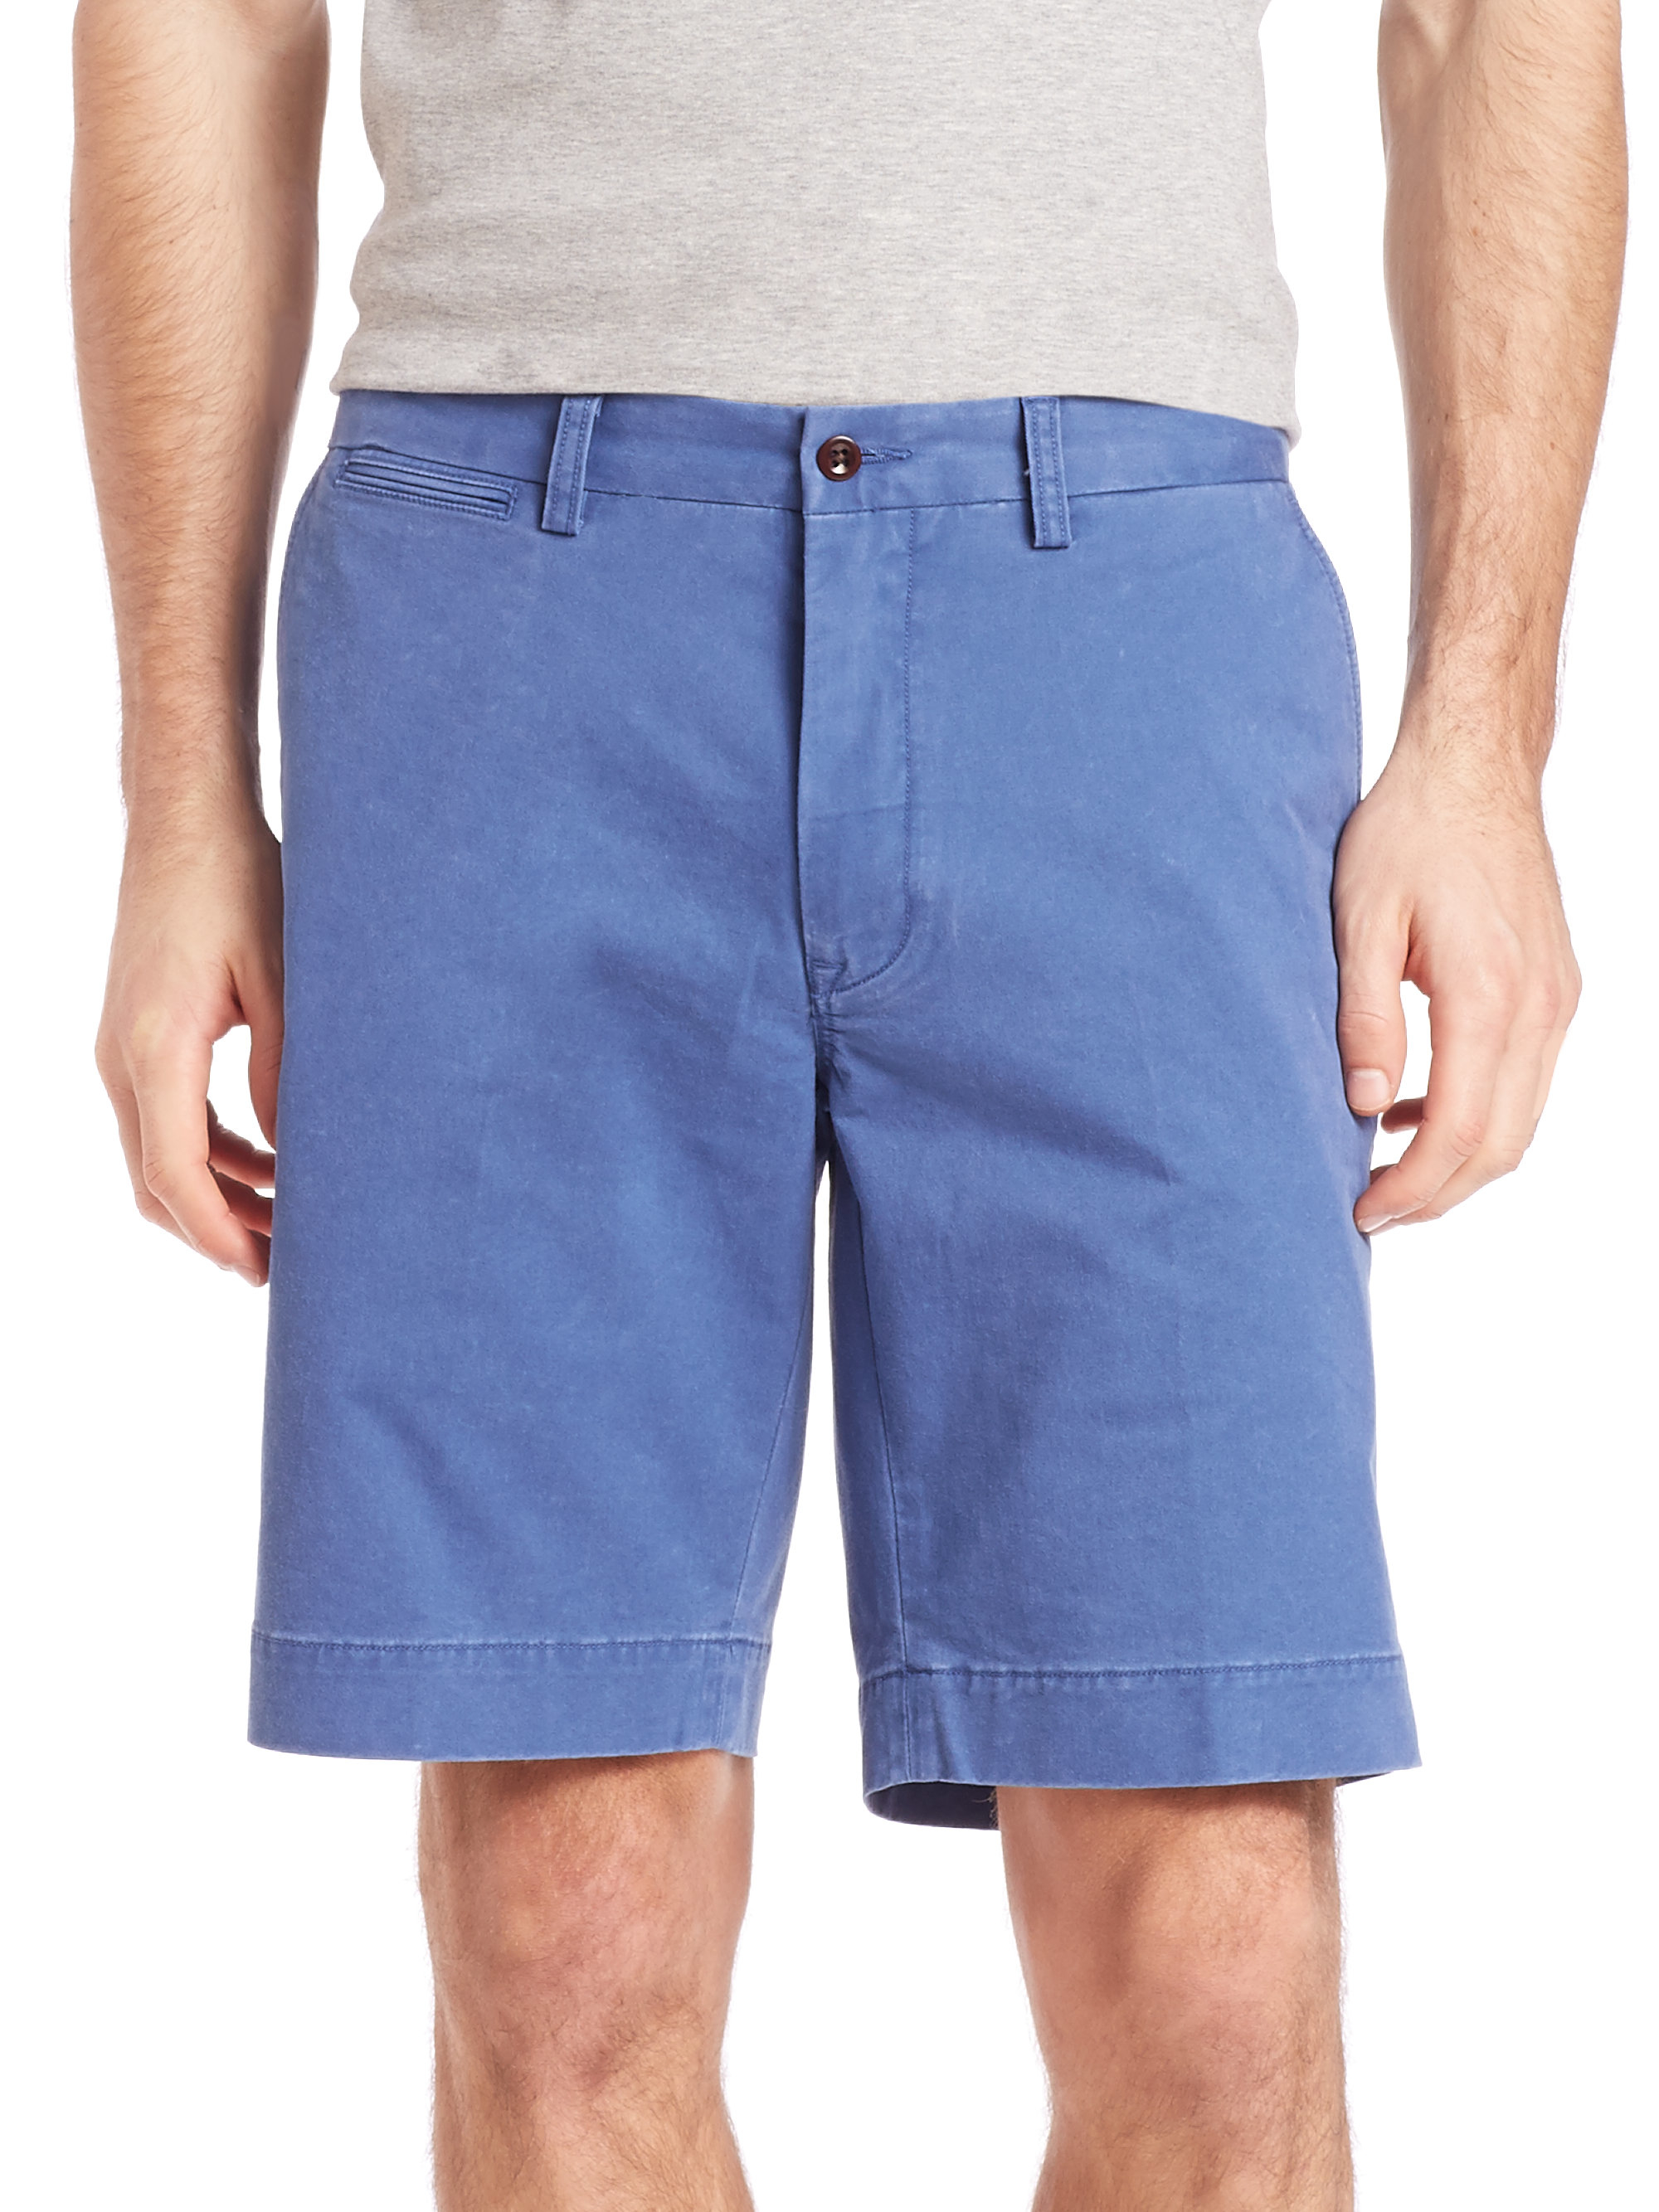 Lyst - Polo ralph lauren Stretch Lightweight Twill Shorts in Blue for Men